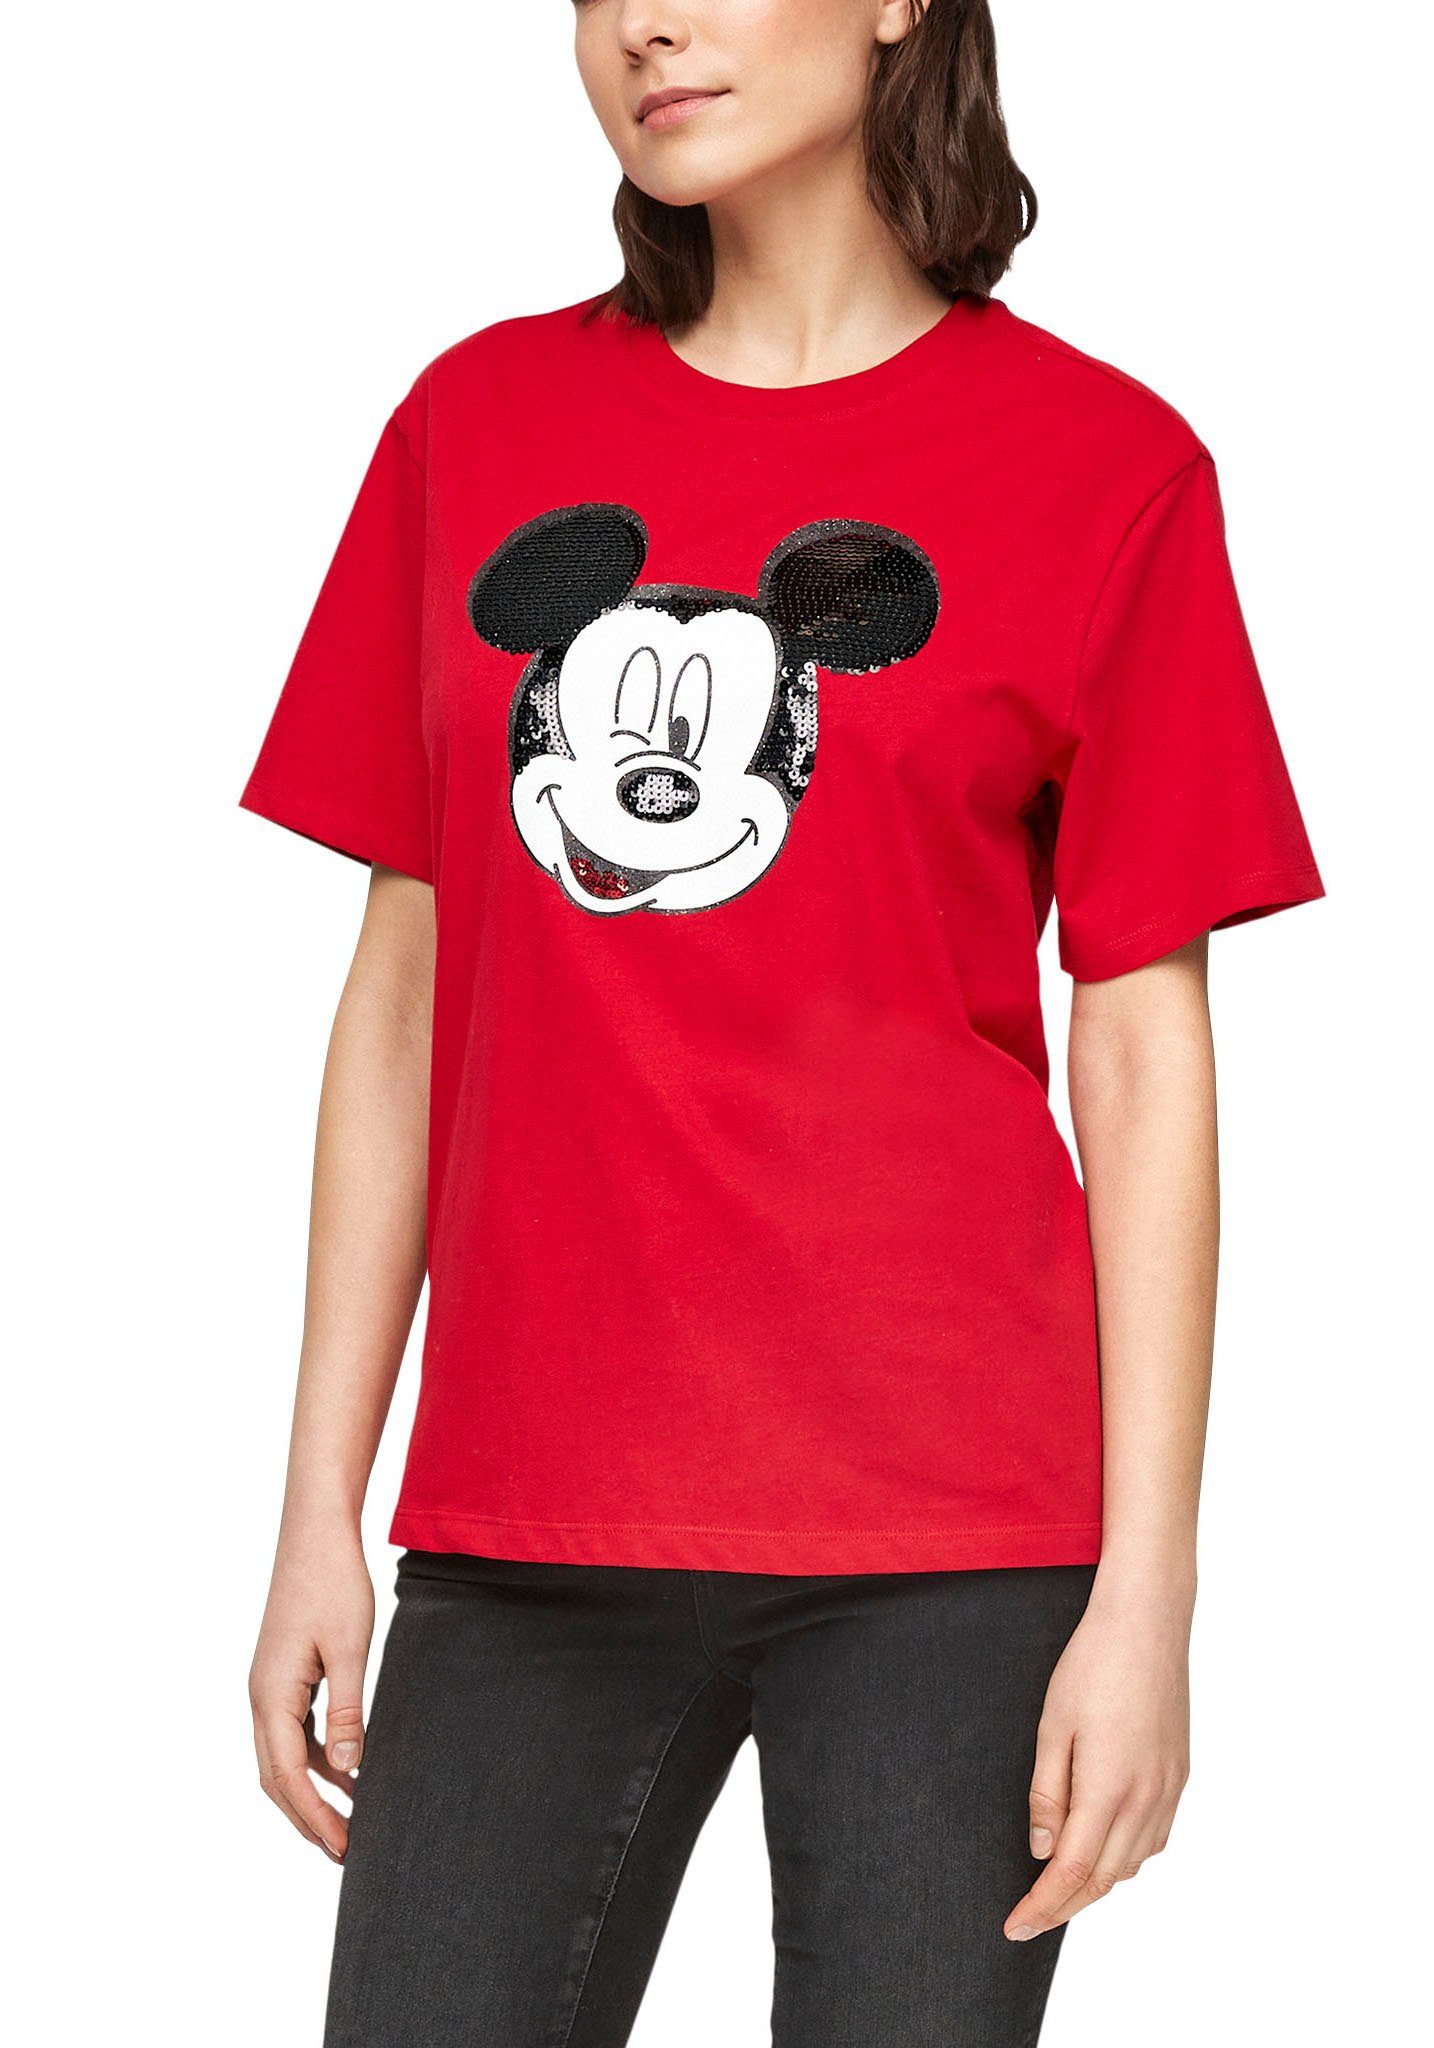 s.Oliver T-Shirt mit coolem Mickey Mouse Paillettenmotiv online kaufen |  OTTO